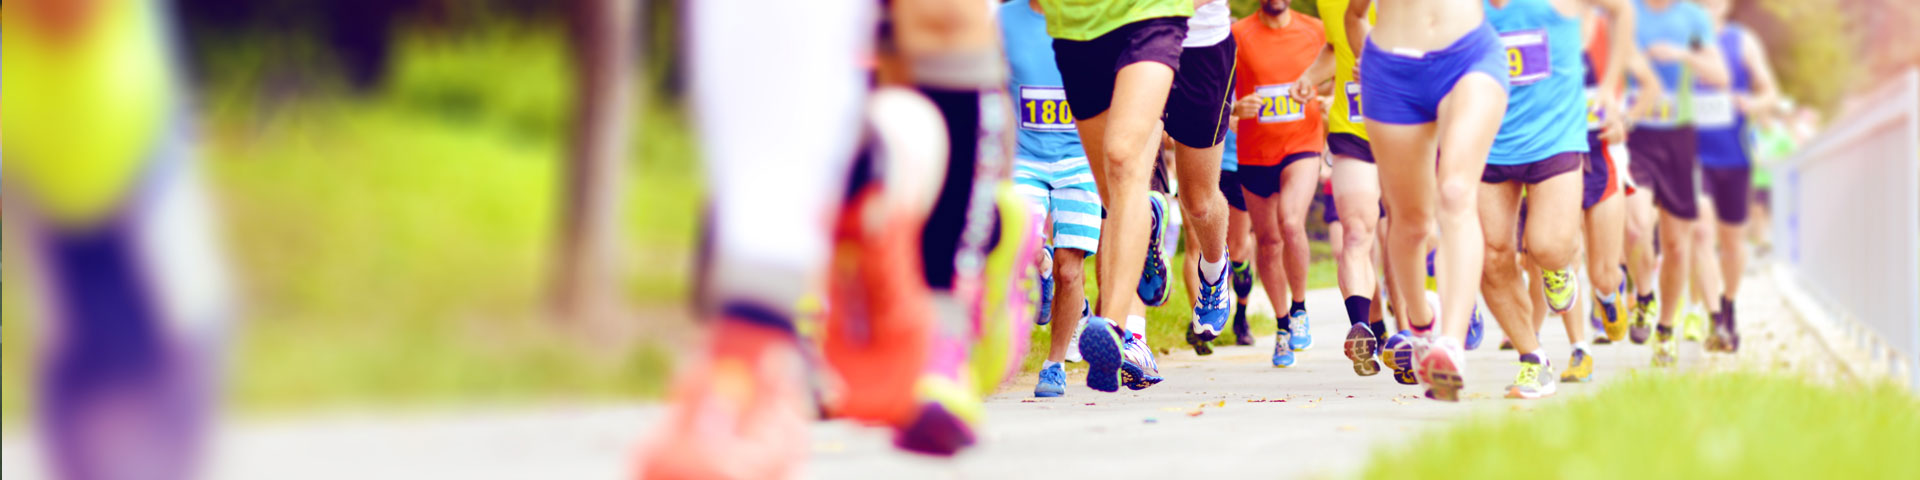 Unidentified marathon race